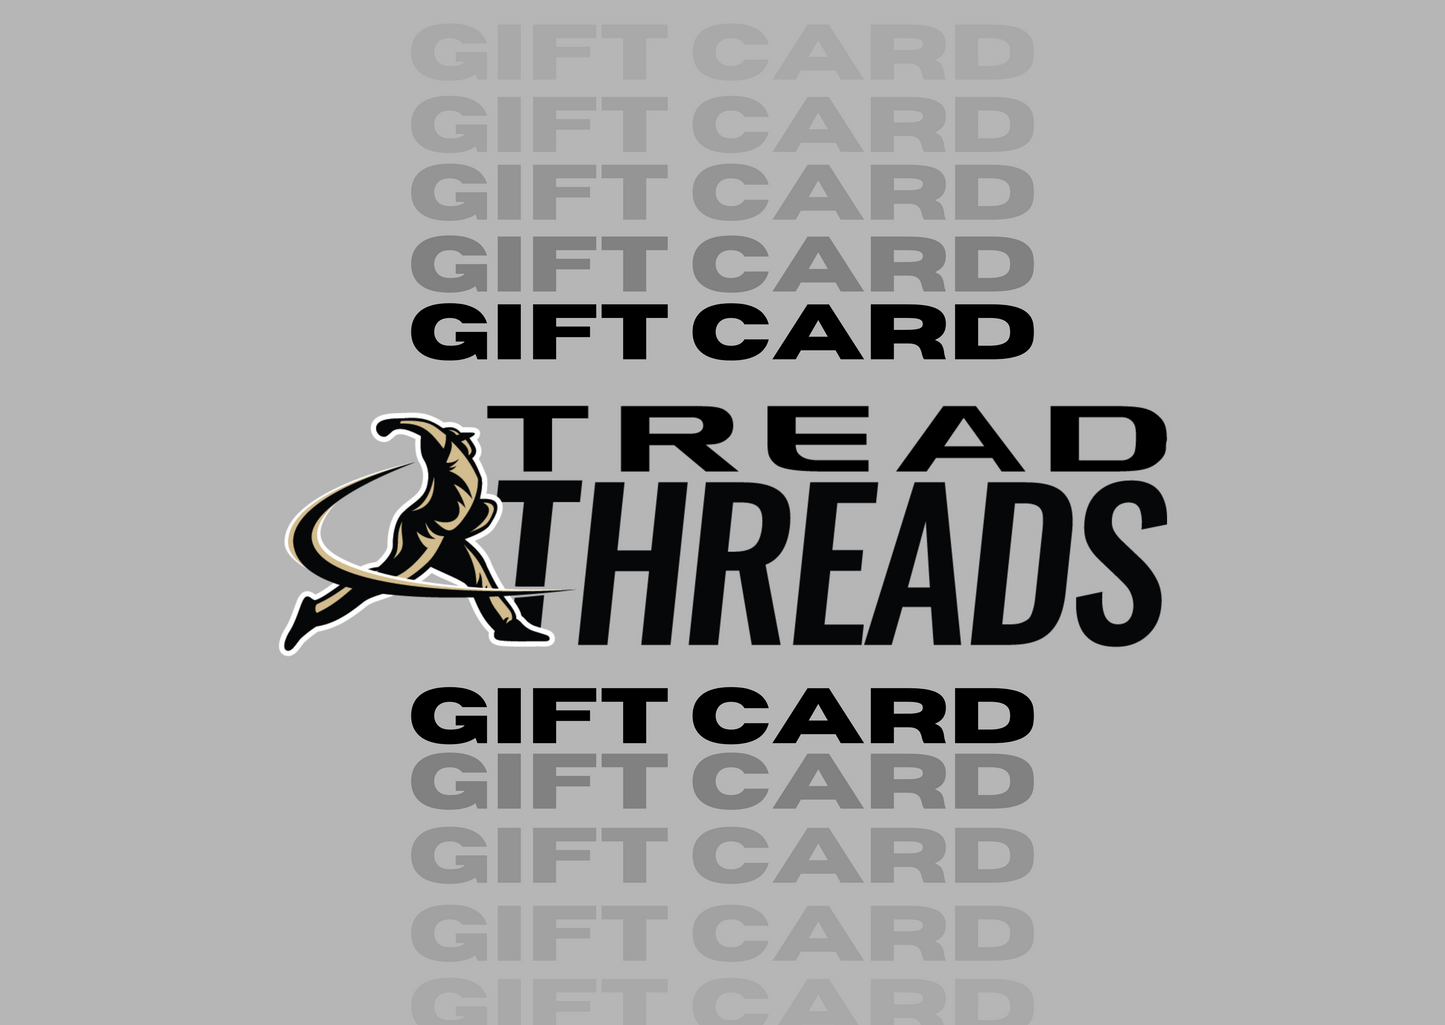 TreadThreads Gift Card